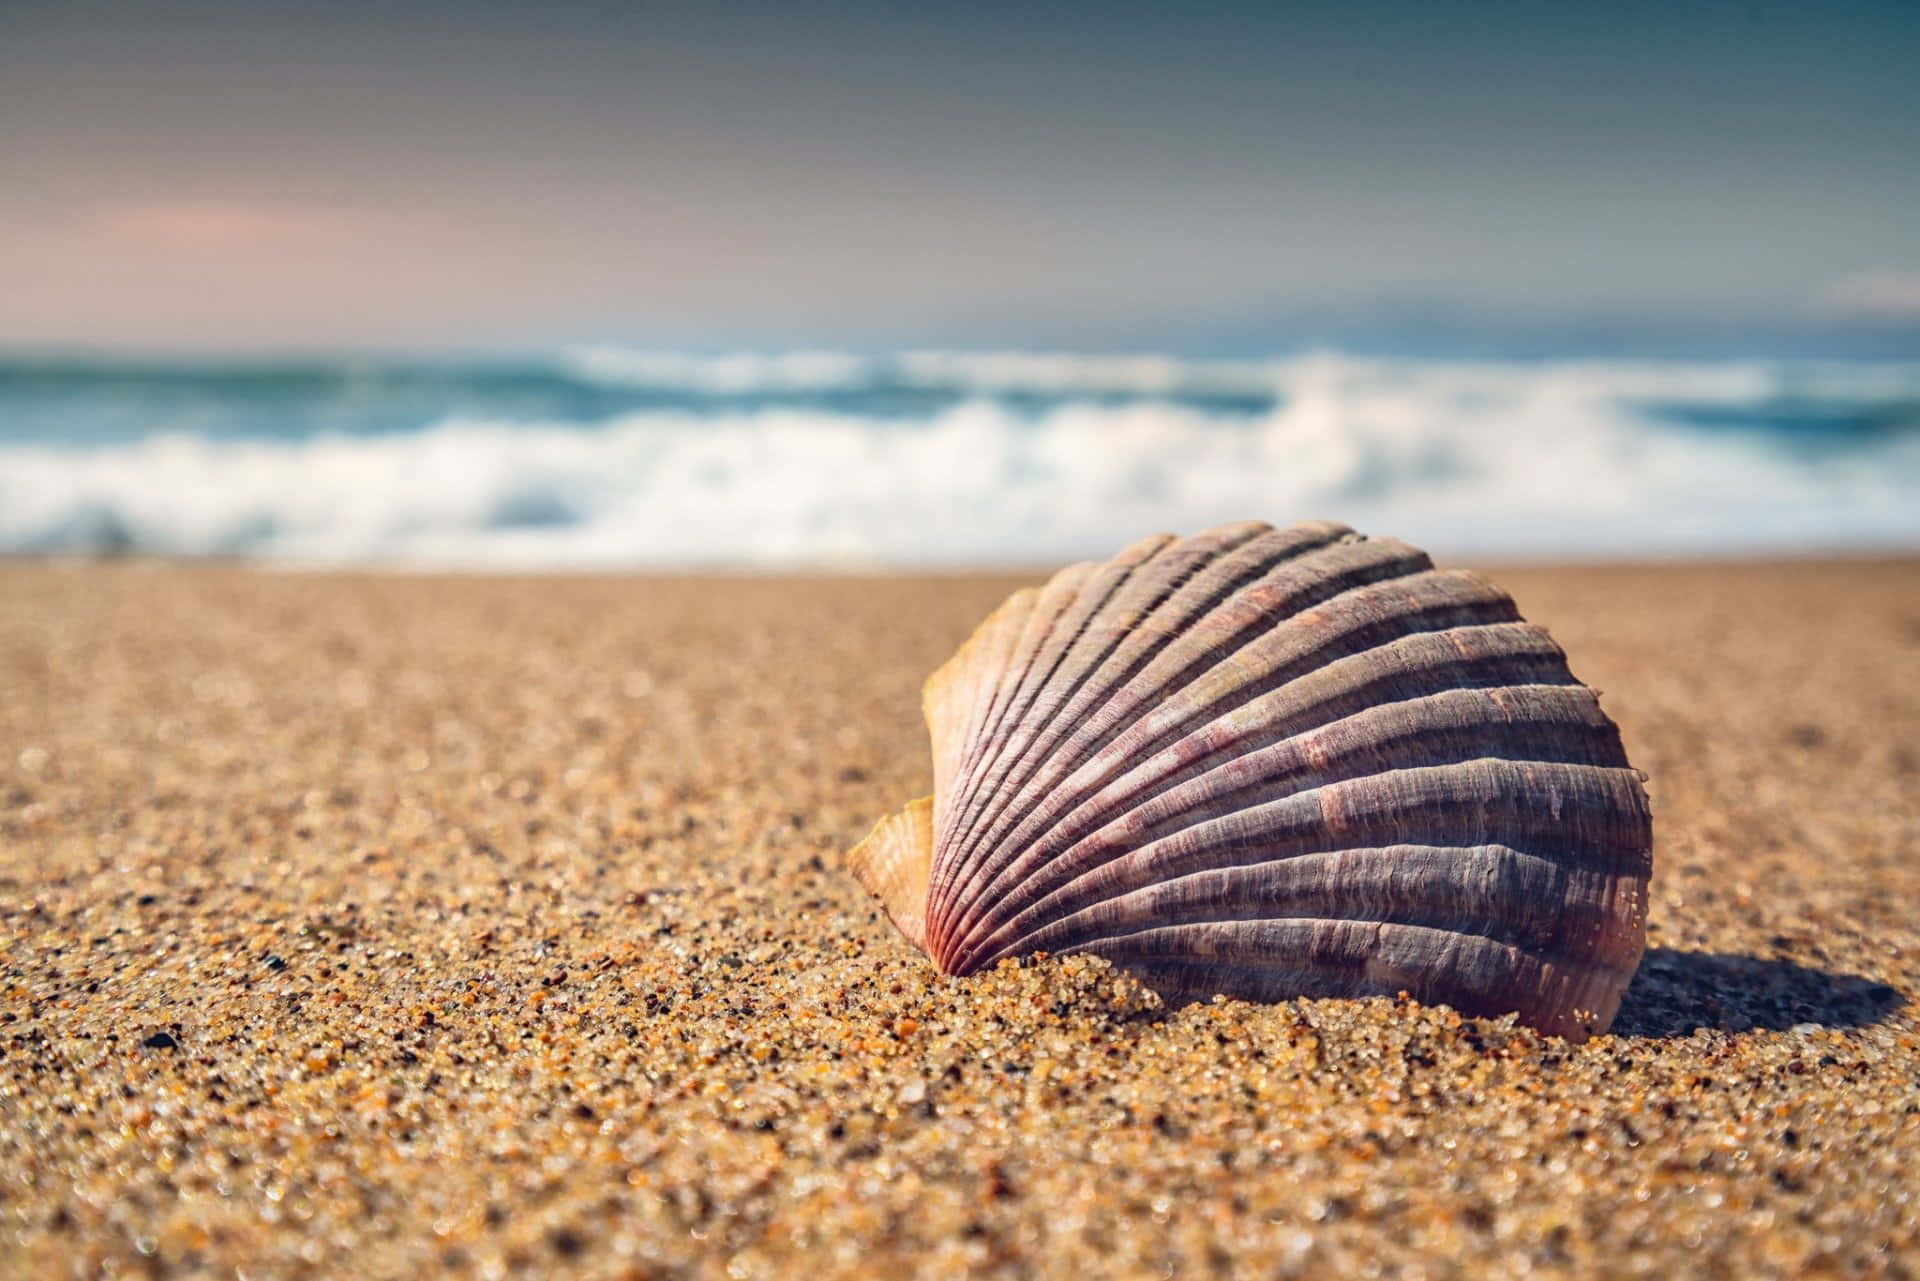 Exquisite Shell on Golden Beach Sands